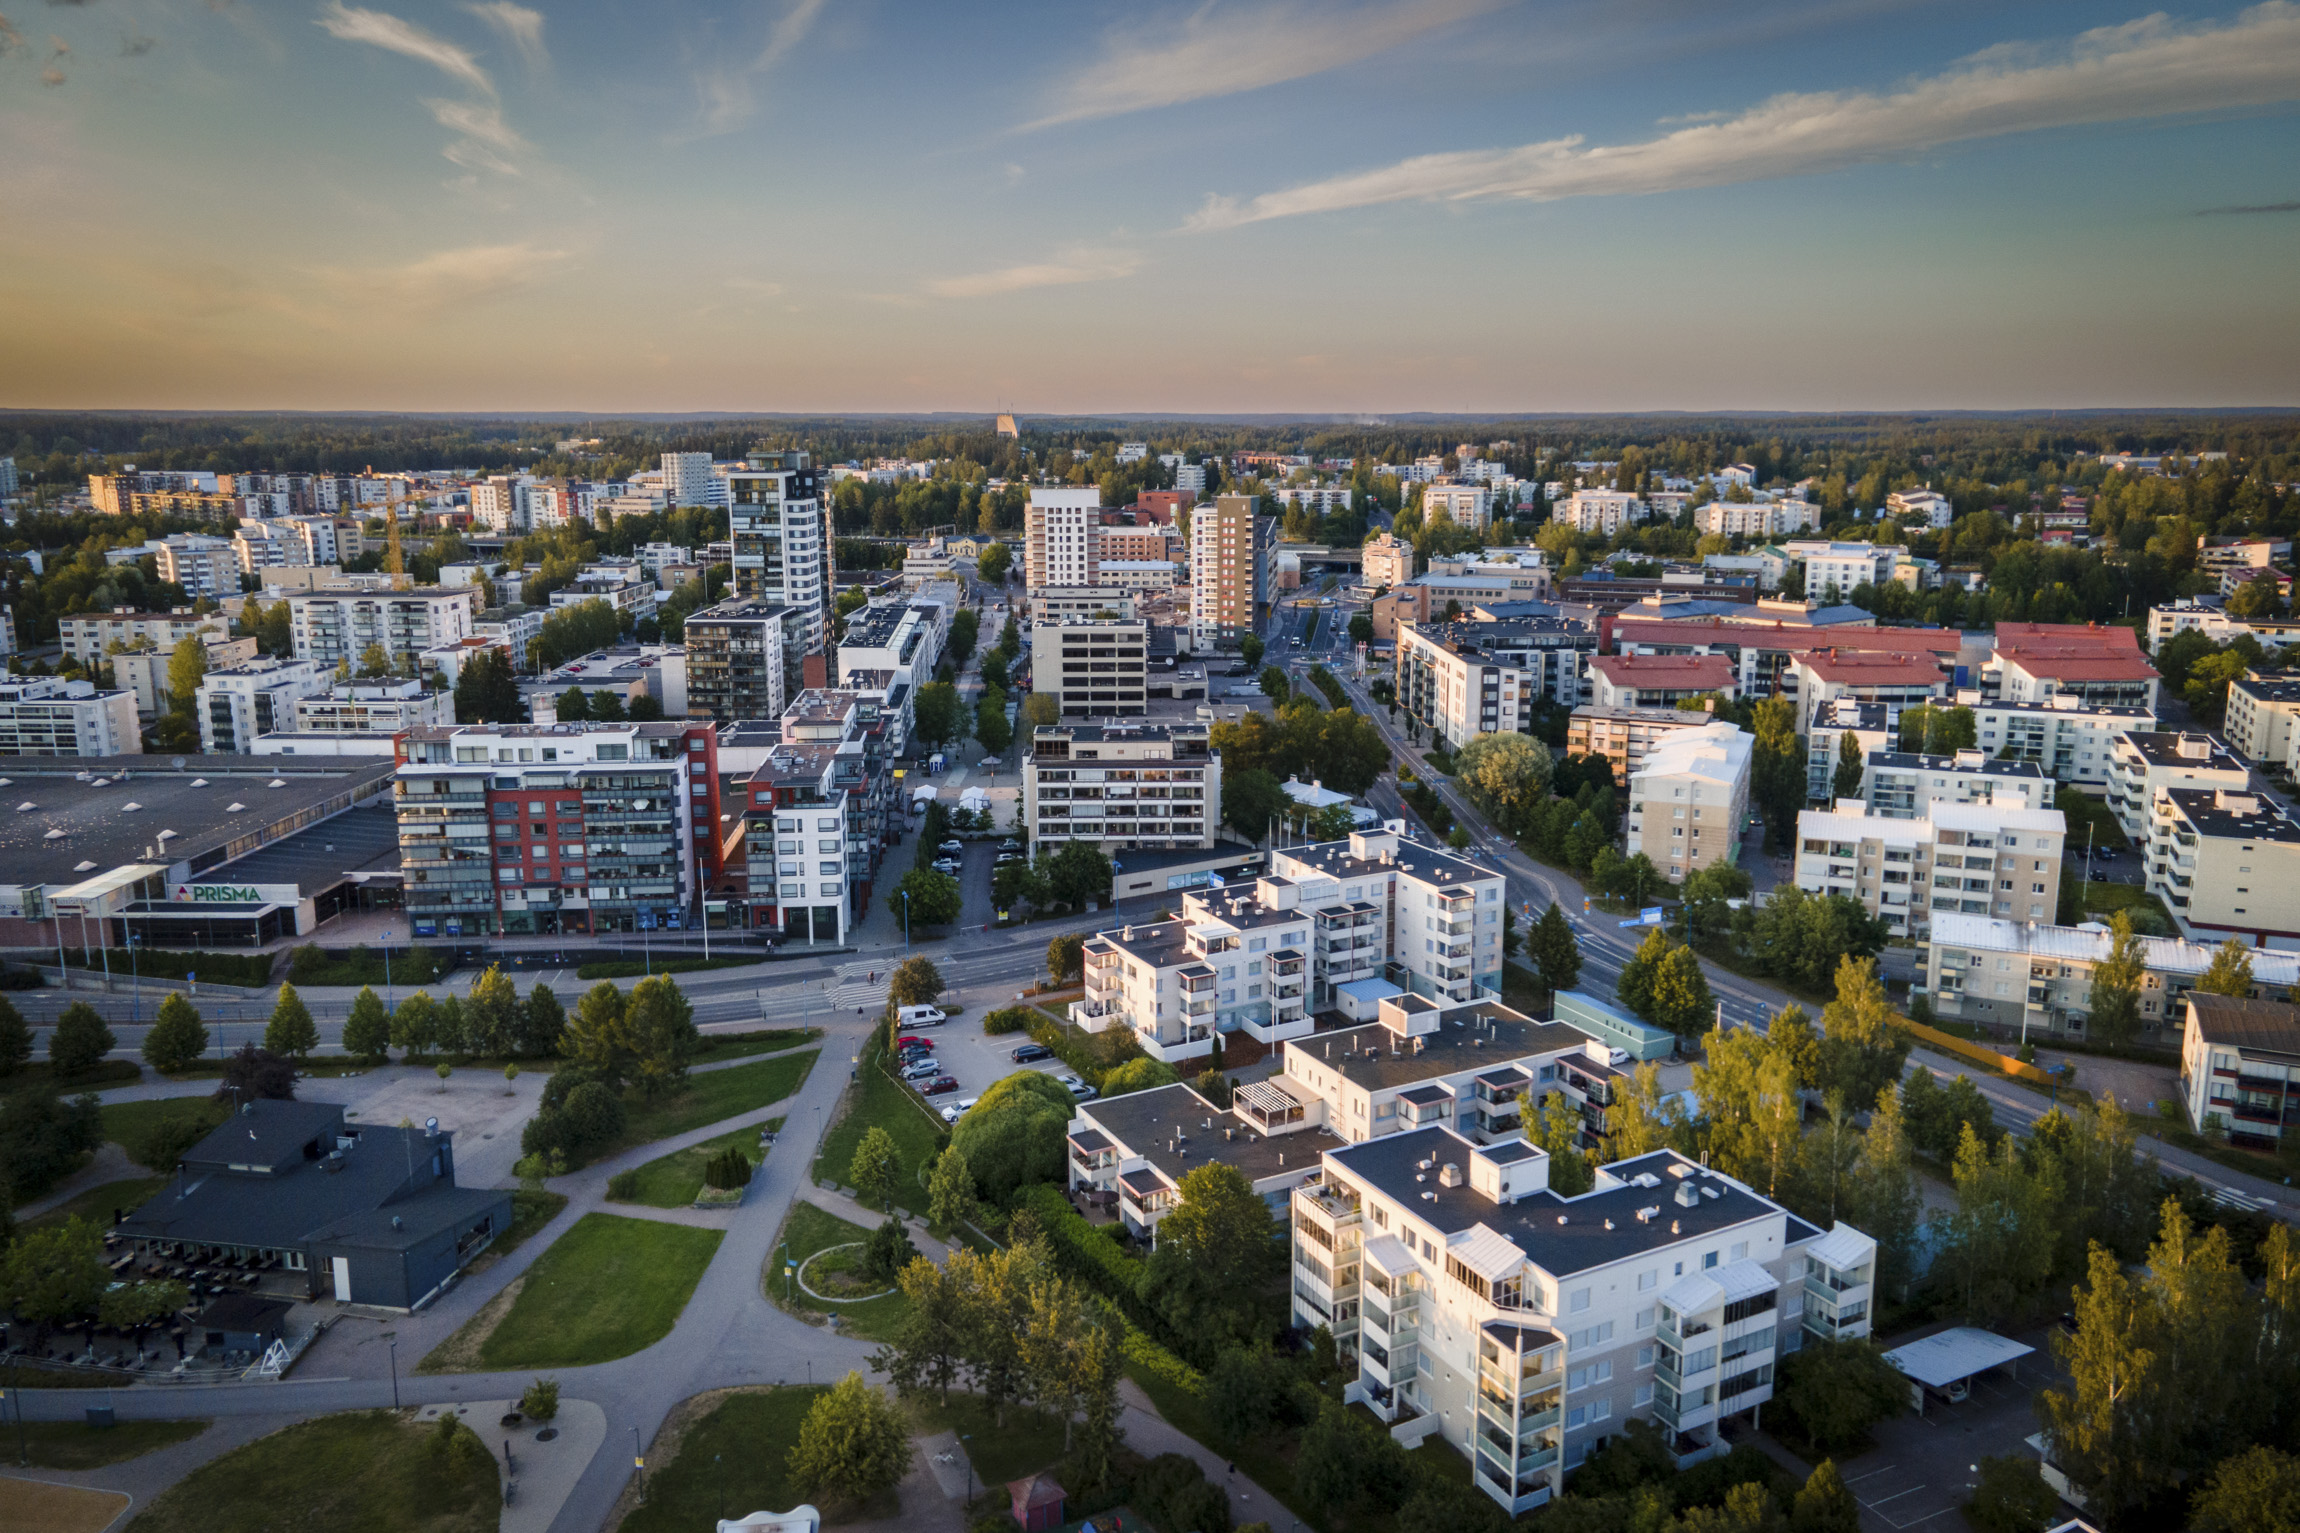 The picture shows Järvenpää city centre